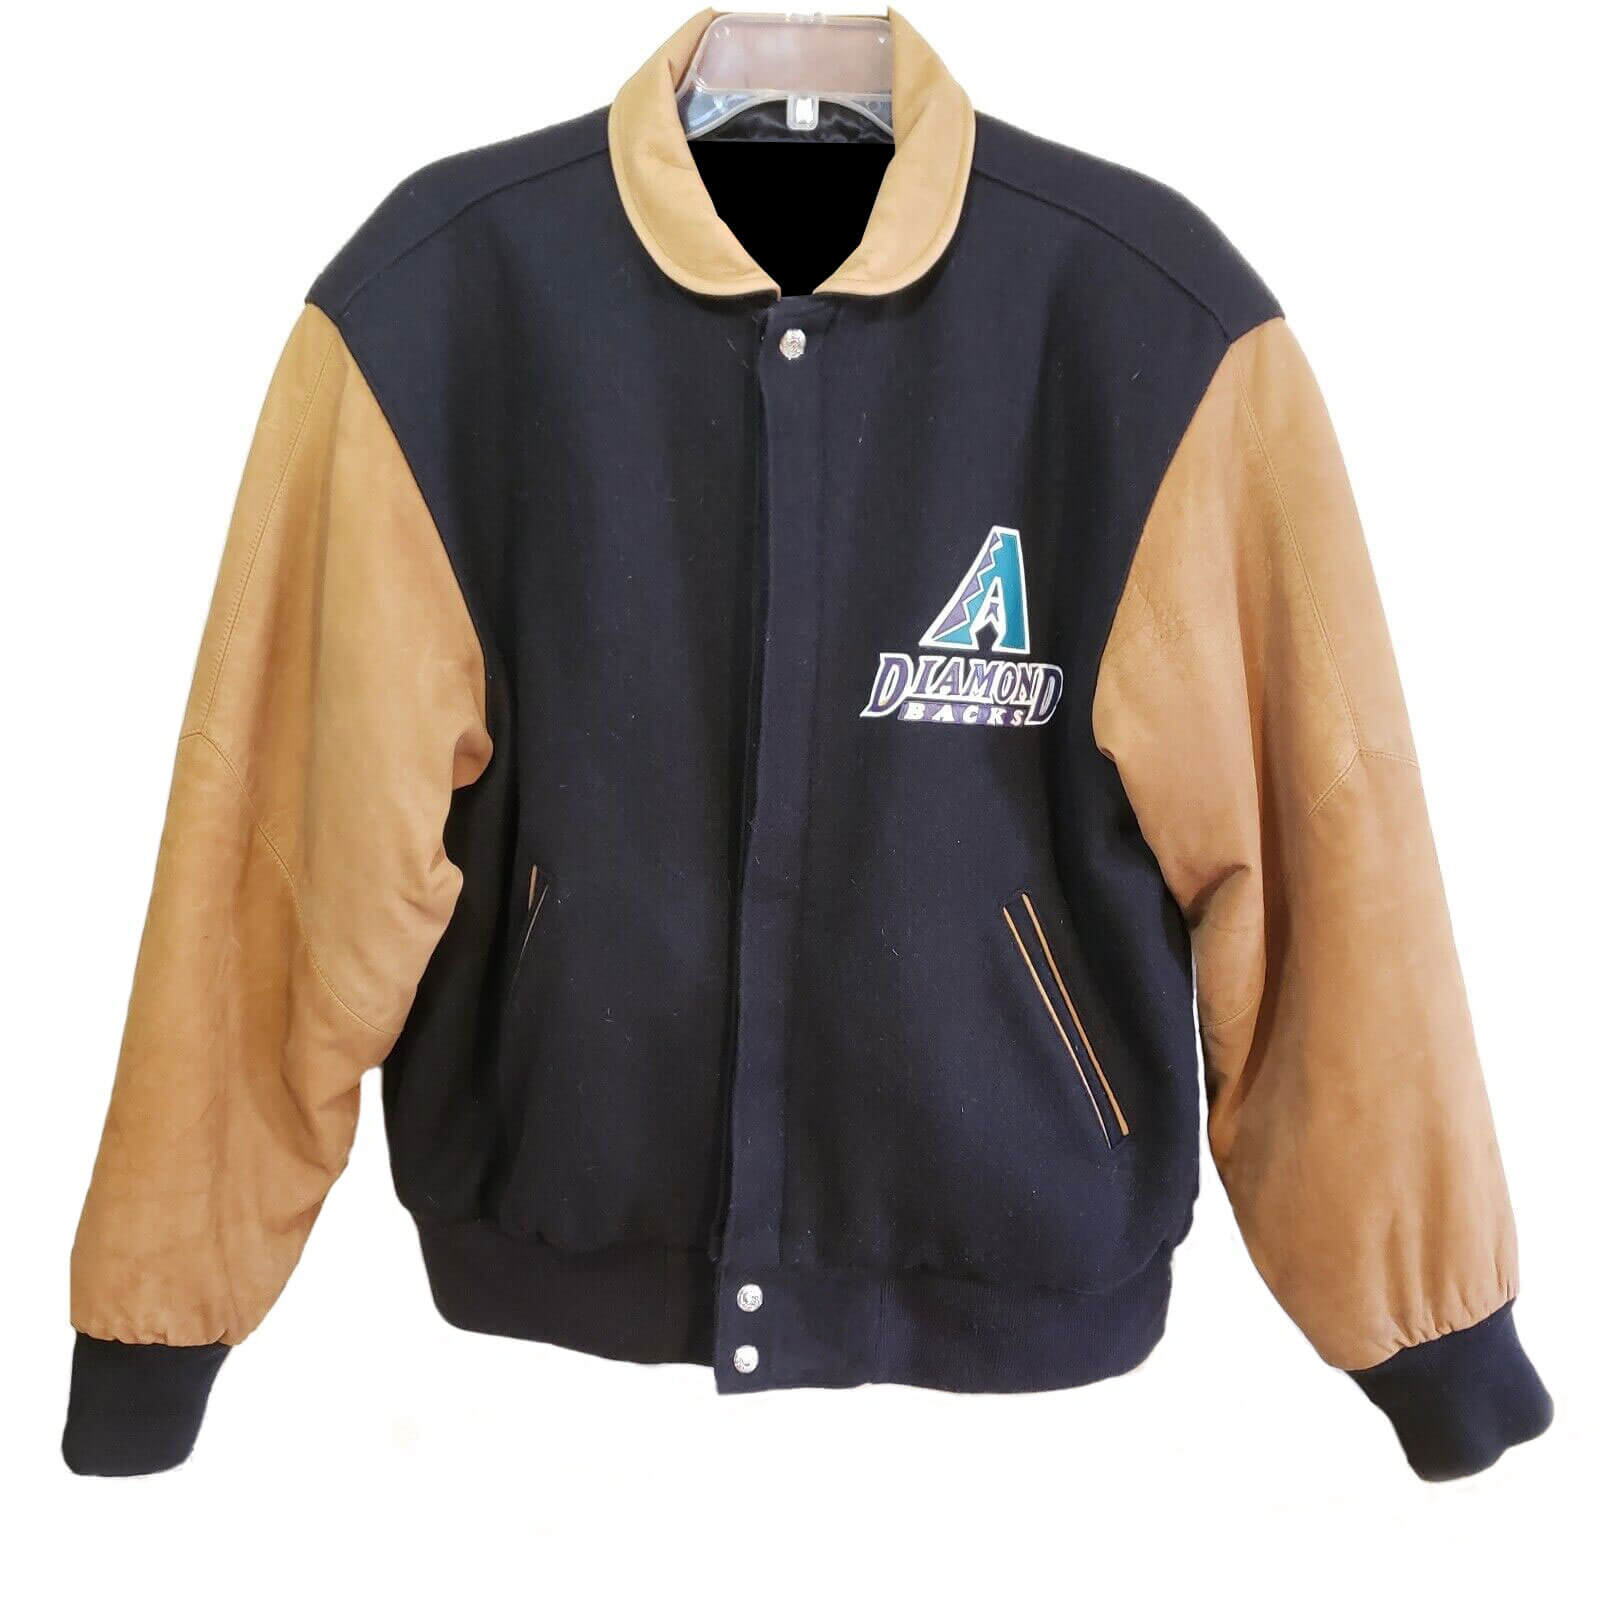 Arizona Diamondbacks T Shirt Vintage 98' MLB